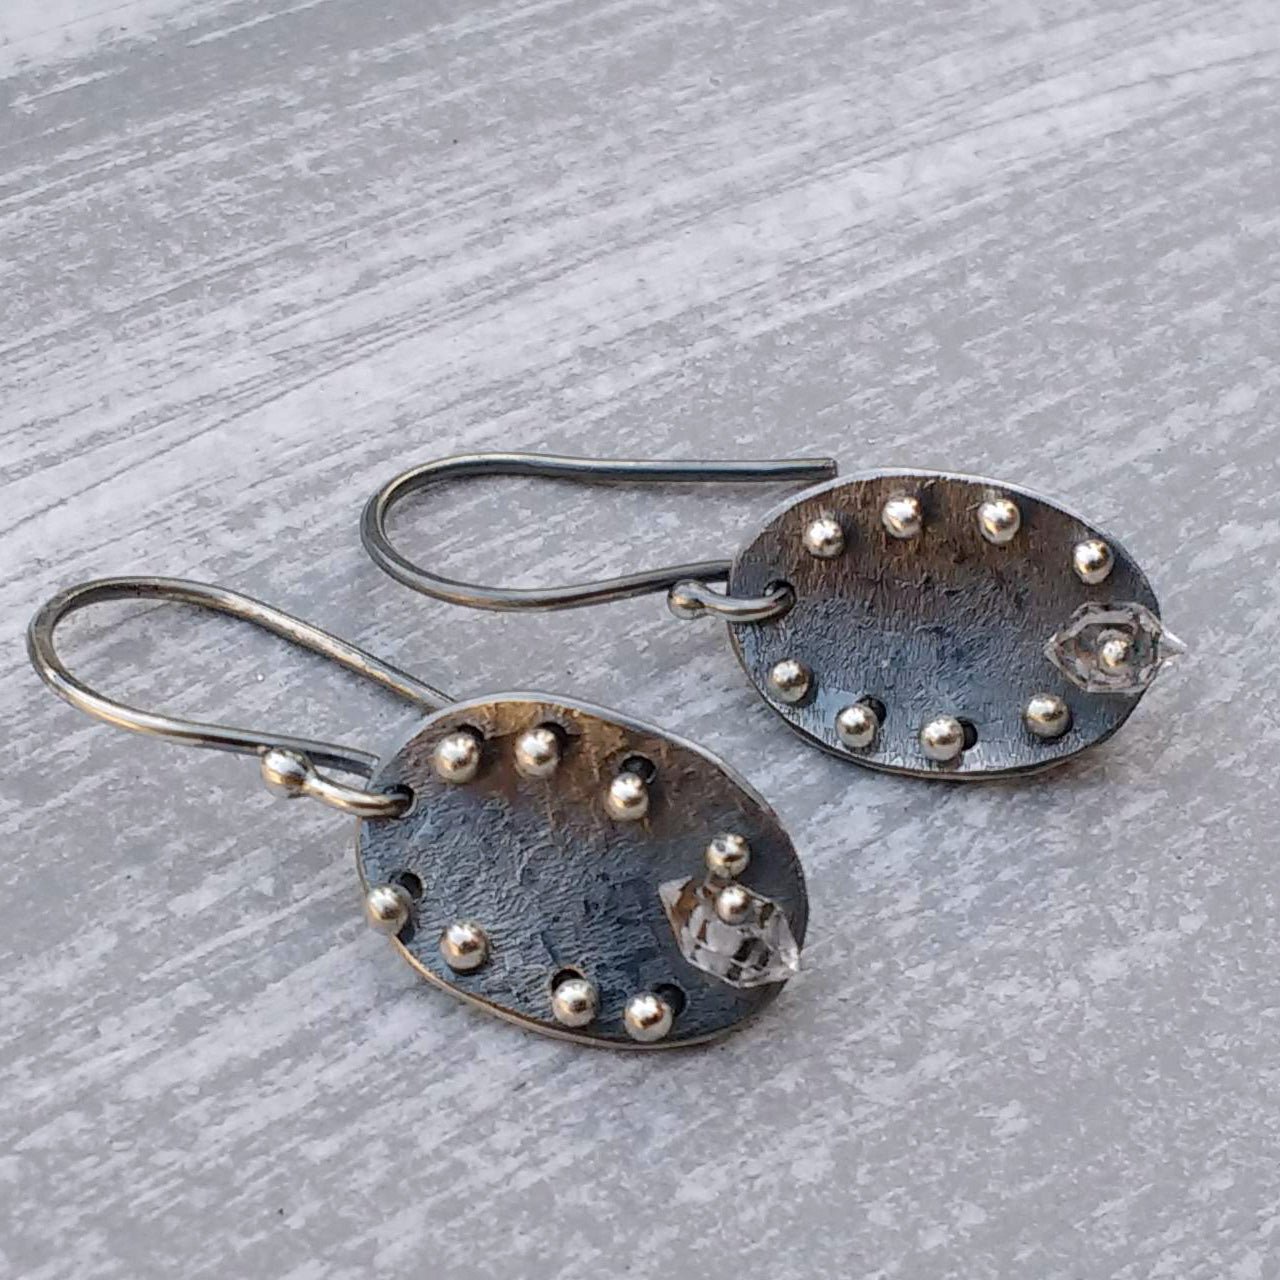 Handmade sterling silver earrings with Herkimer diamonds